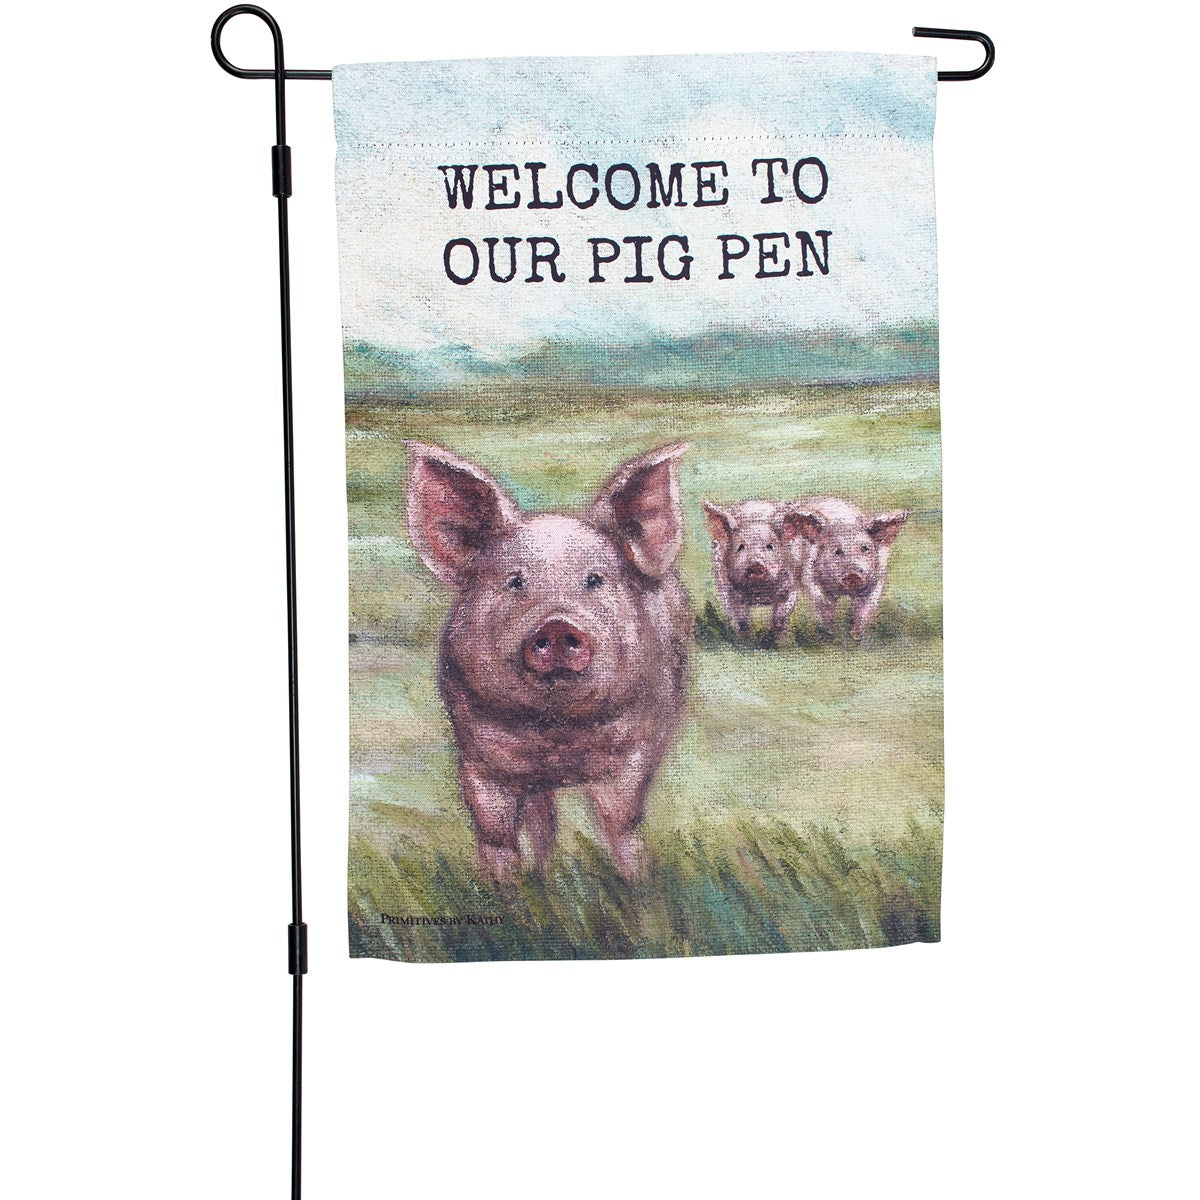 "WELCOME TO OUR PIG PEN" GARDEN FLAG